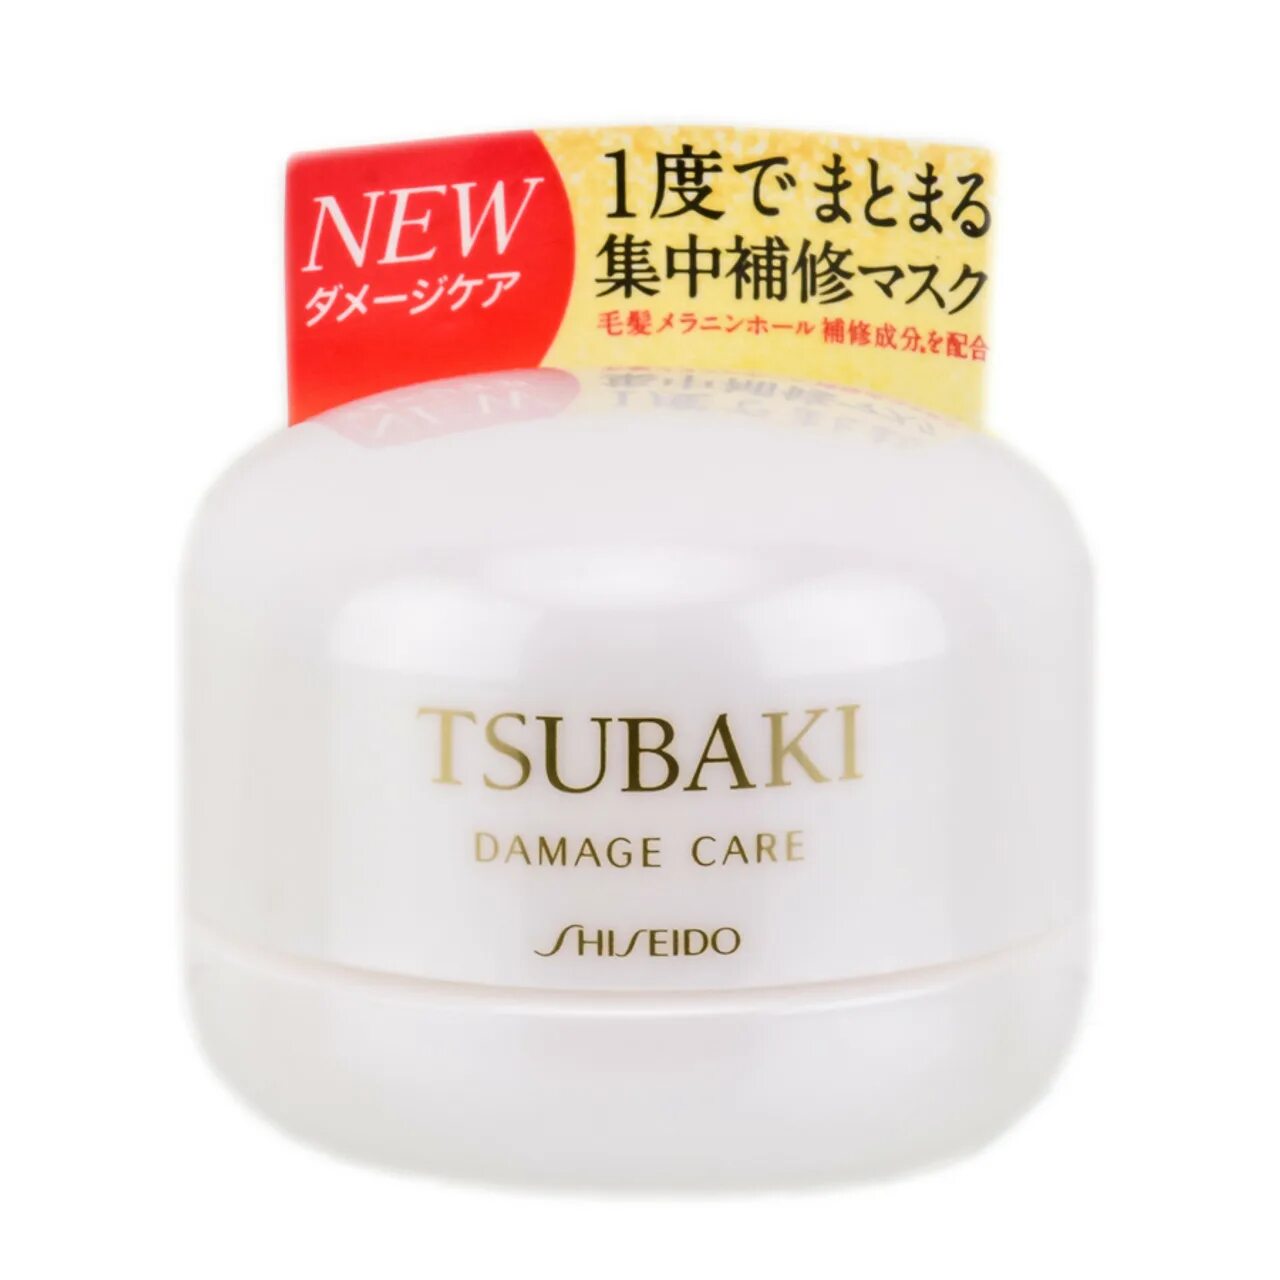 Shiseido Tsubaki маска. Shiseido Tsubaki Damage Care. Tsubaki маска для волос. Tsubaki Золотая маска. Shiseido для волос